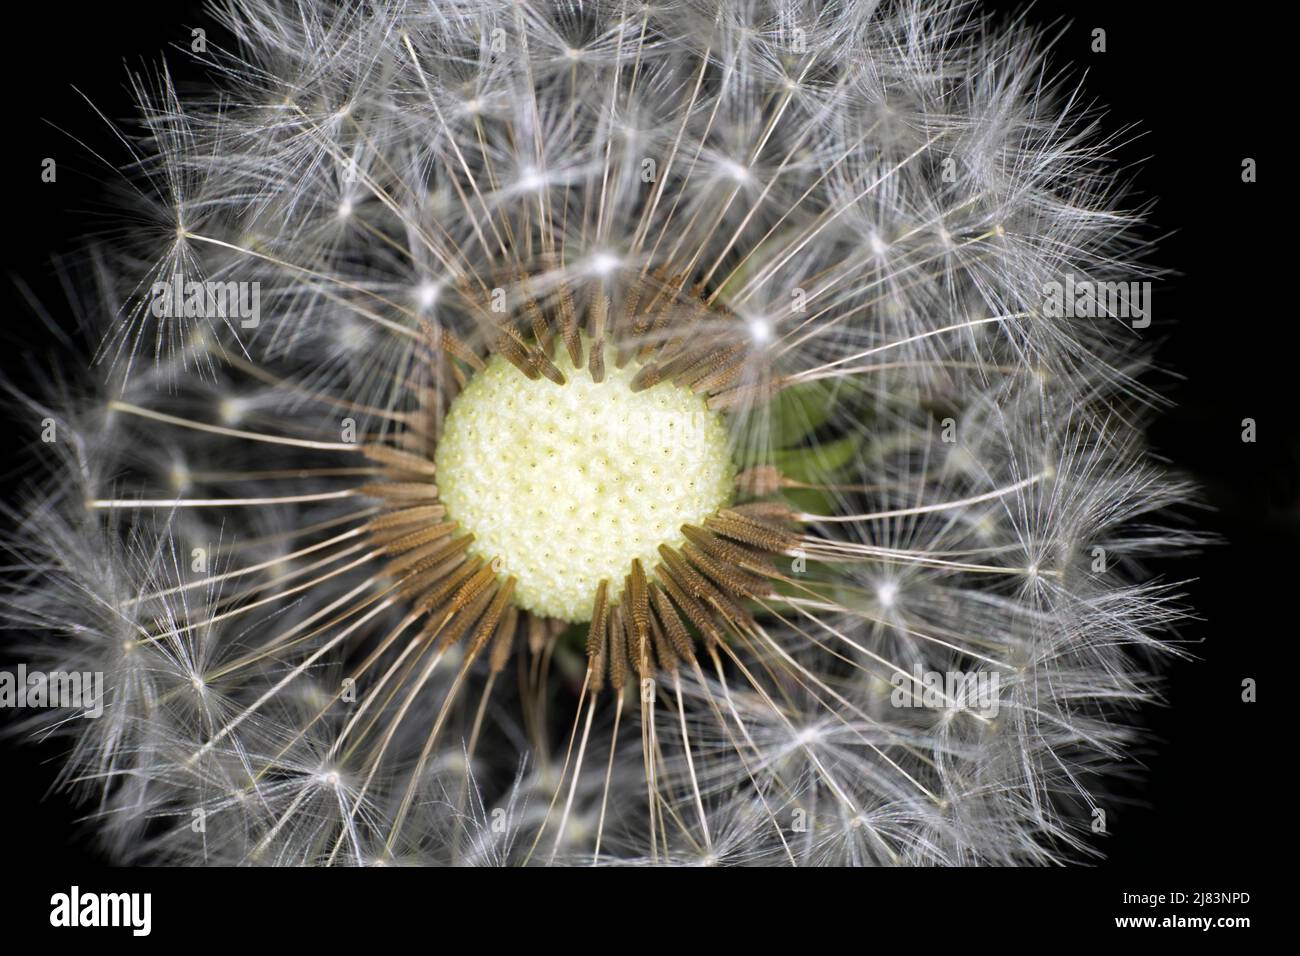 Symbolic image heart, dandelion (Taraxacum sect. Ruderalia), studio photograph with black background Stock Photo